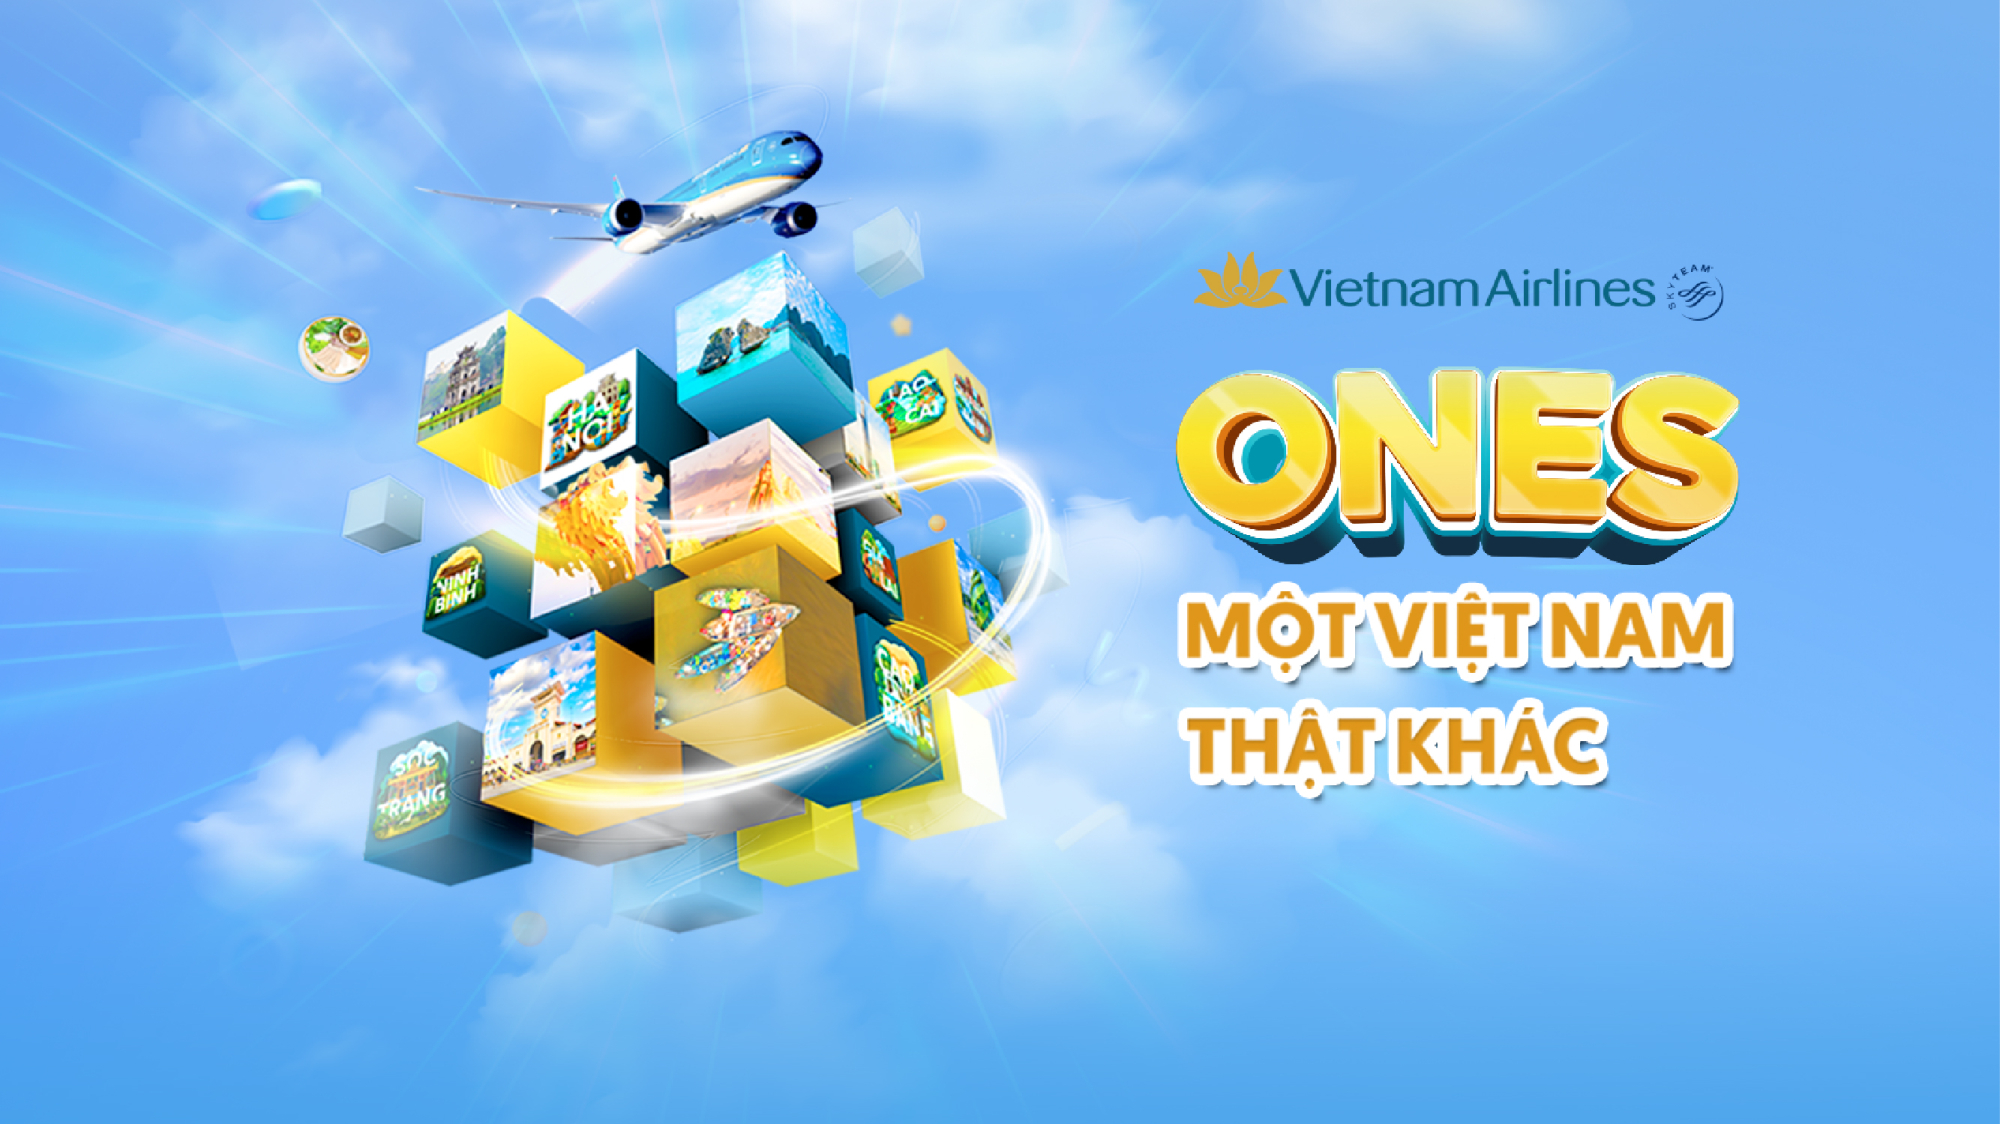 vietnam airlines ra mat one s  game tuong tac ket hop trai nghiem du lich hinh 1